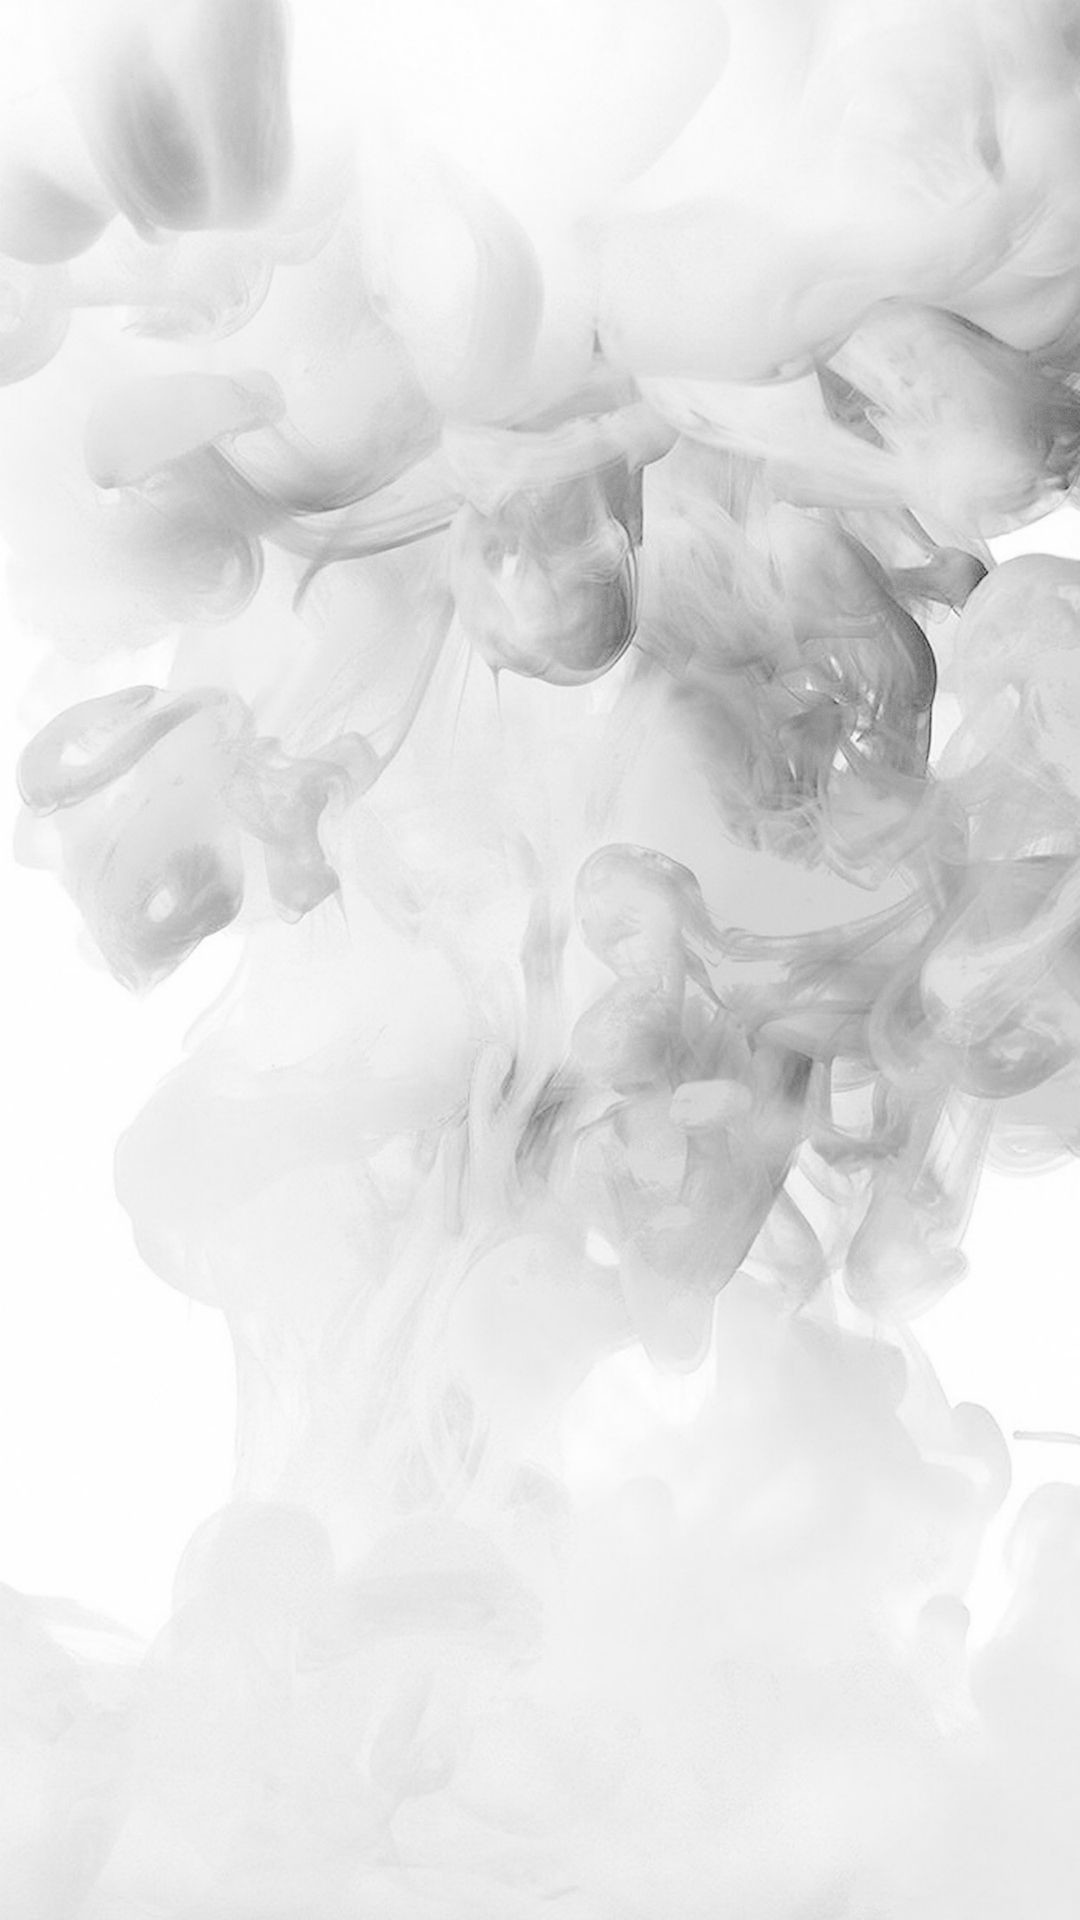 1080x1920 Smoke White Abstract Fog Art Illust iPhone 6 wallpaper